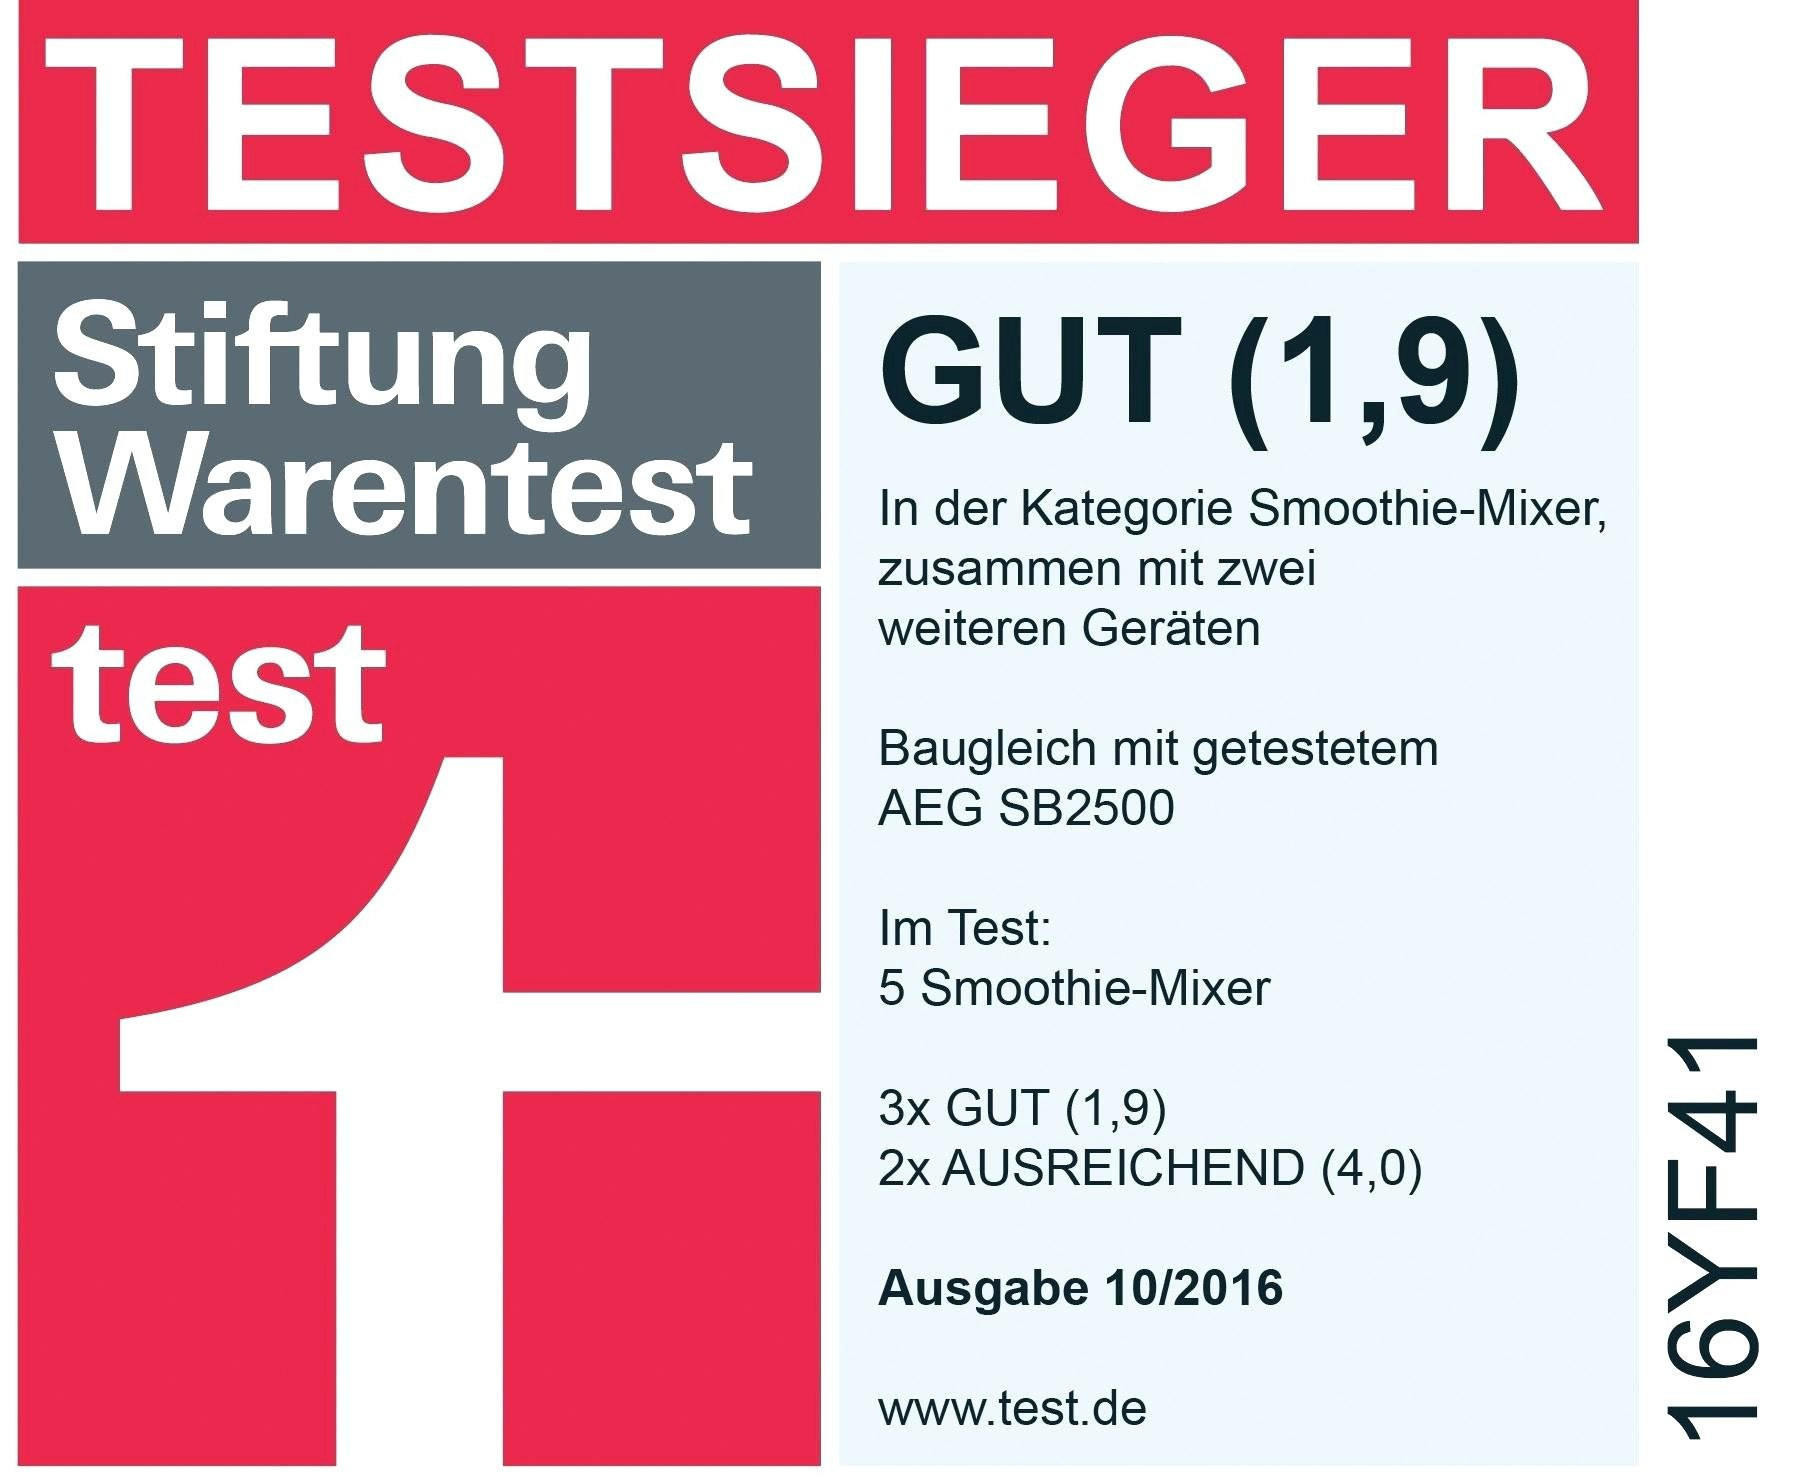 Beste 20 Matratzen Stiftung Warentest - Beste Wohnkultur ...